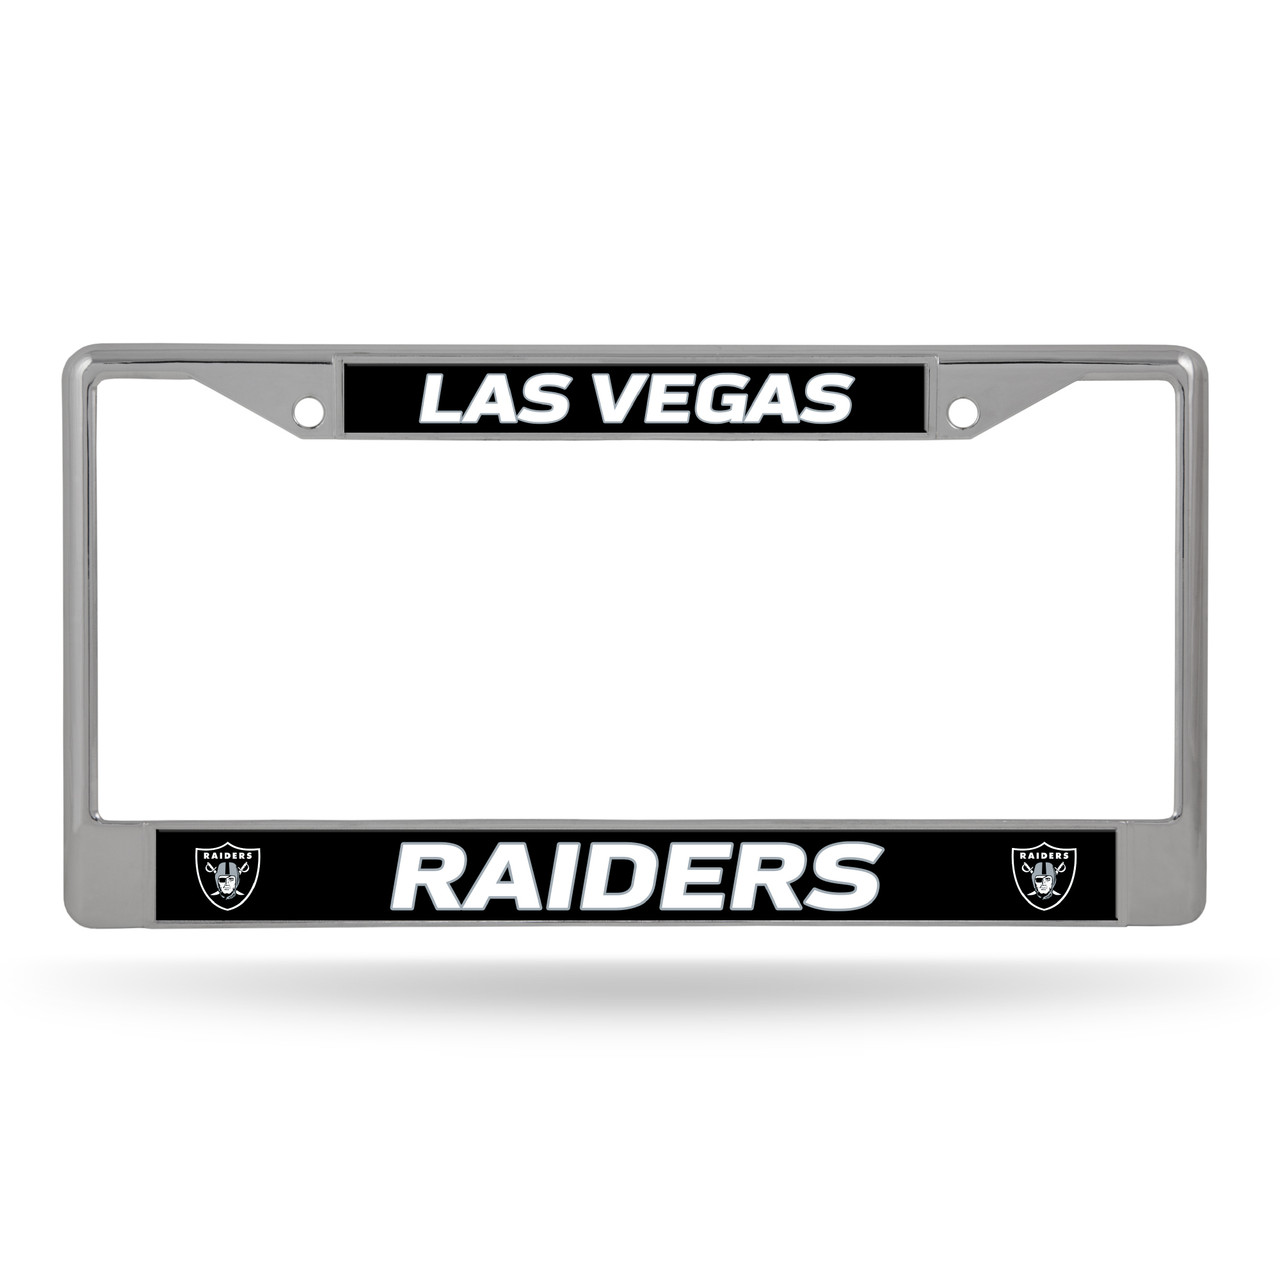 Rico Industries 1140725484 Las Vegas Raiders License Plate Frame, Chrome